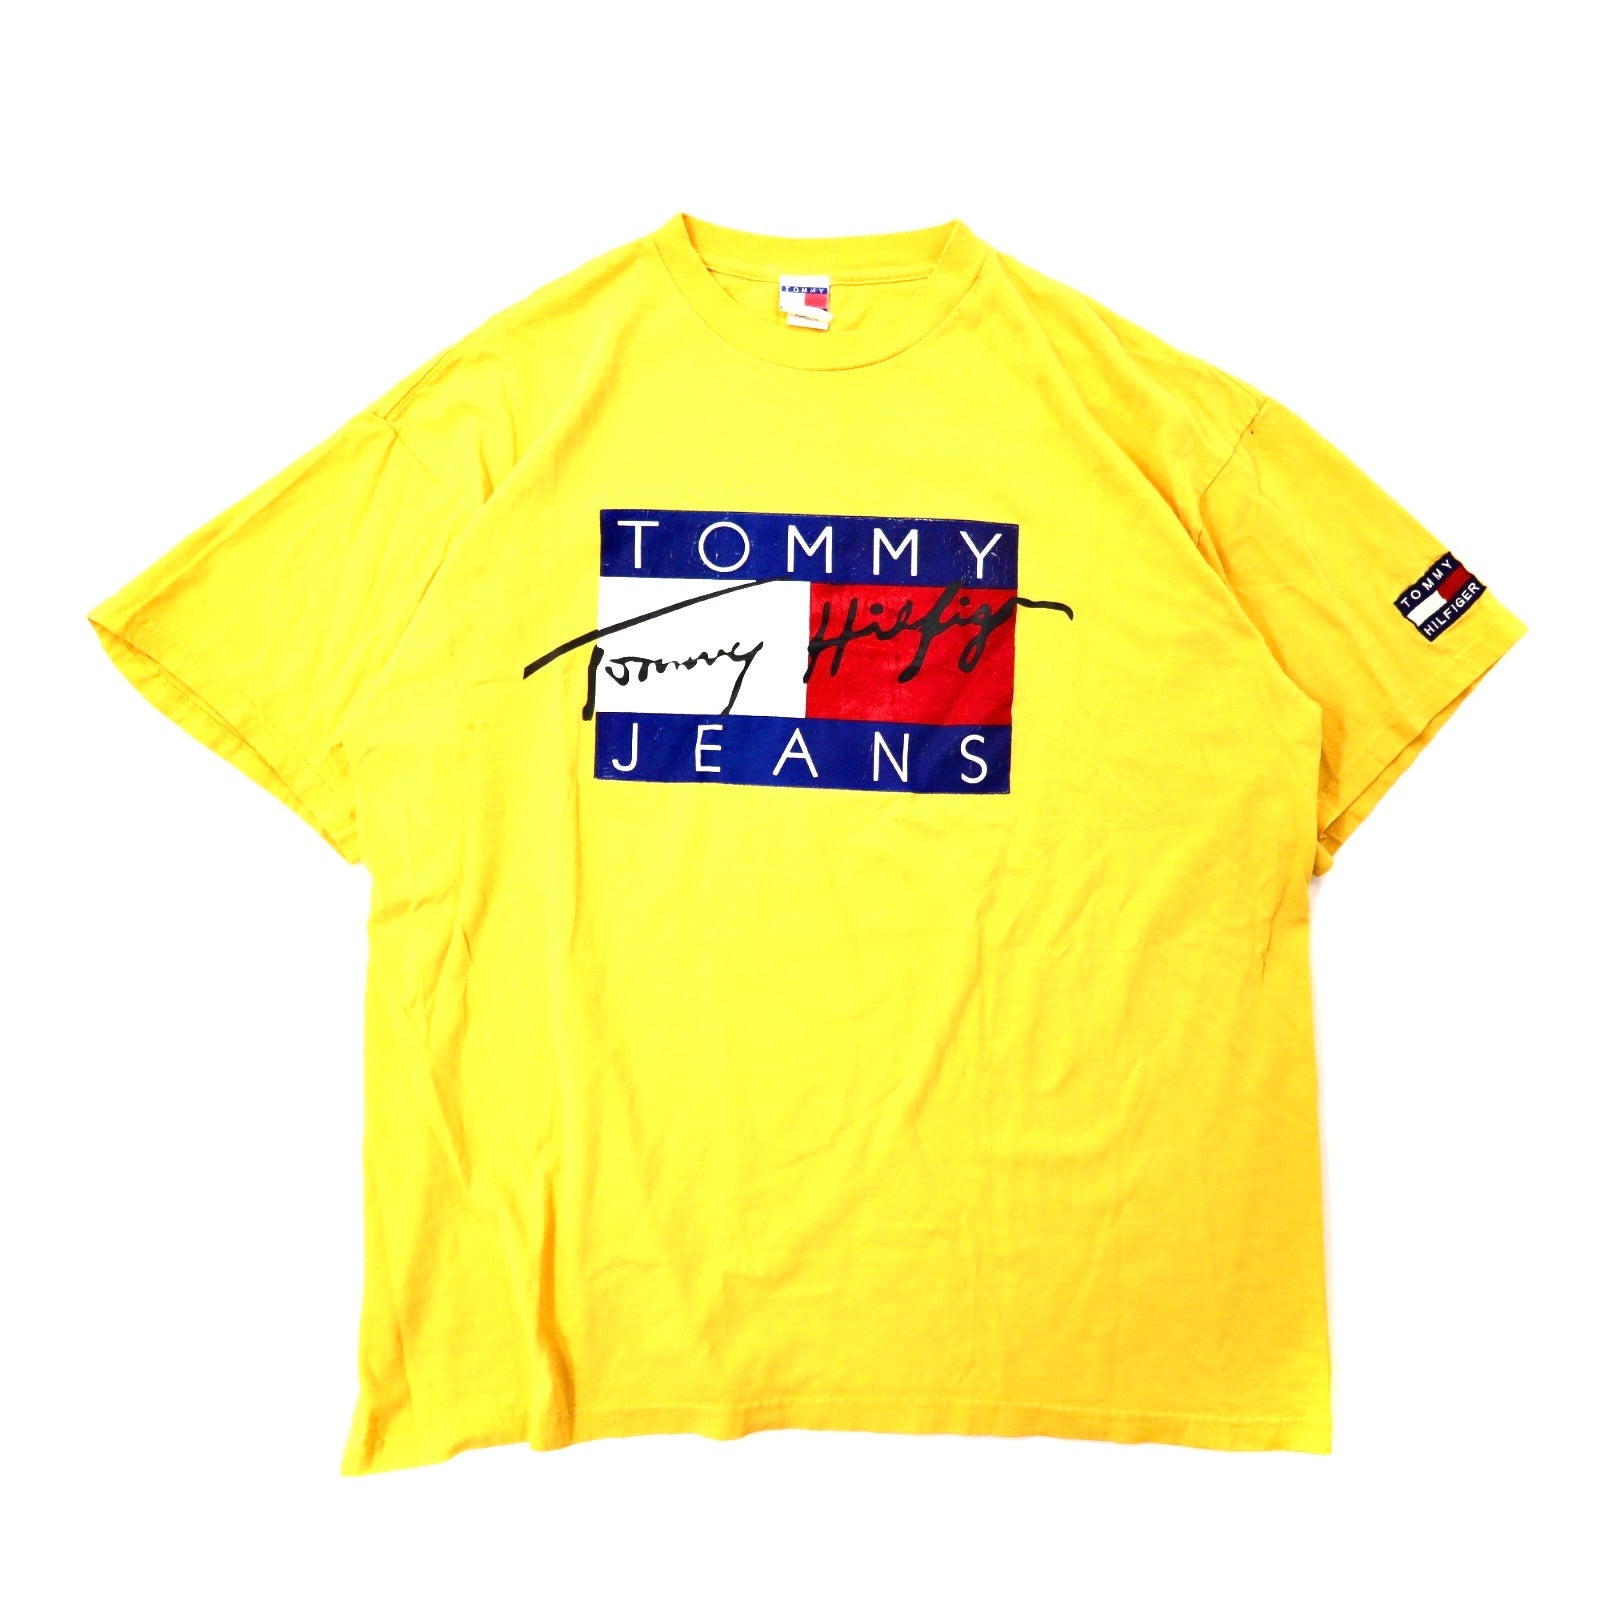 TOMMY HILFIGER Big Logo Print T-shirt XXL Yellow USA Big Size